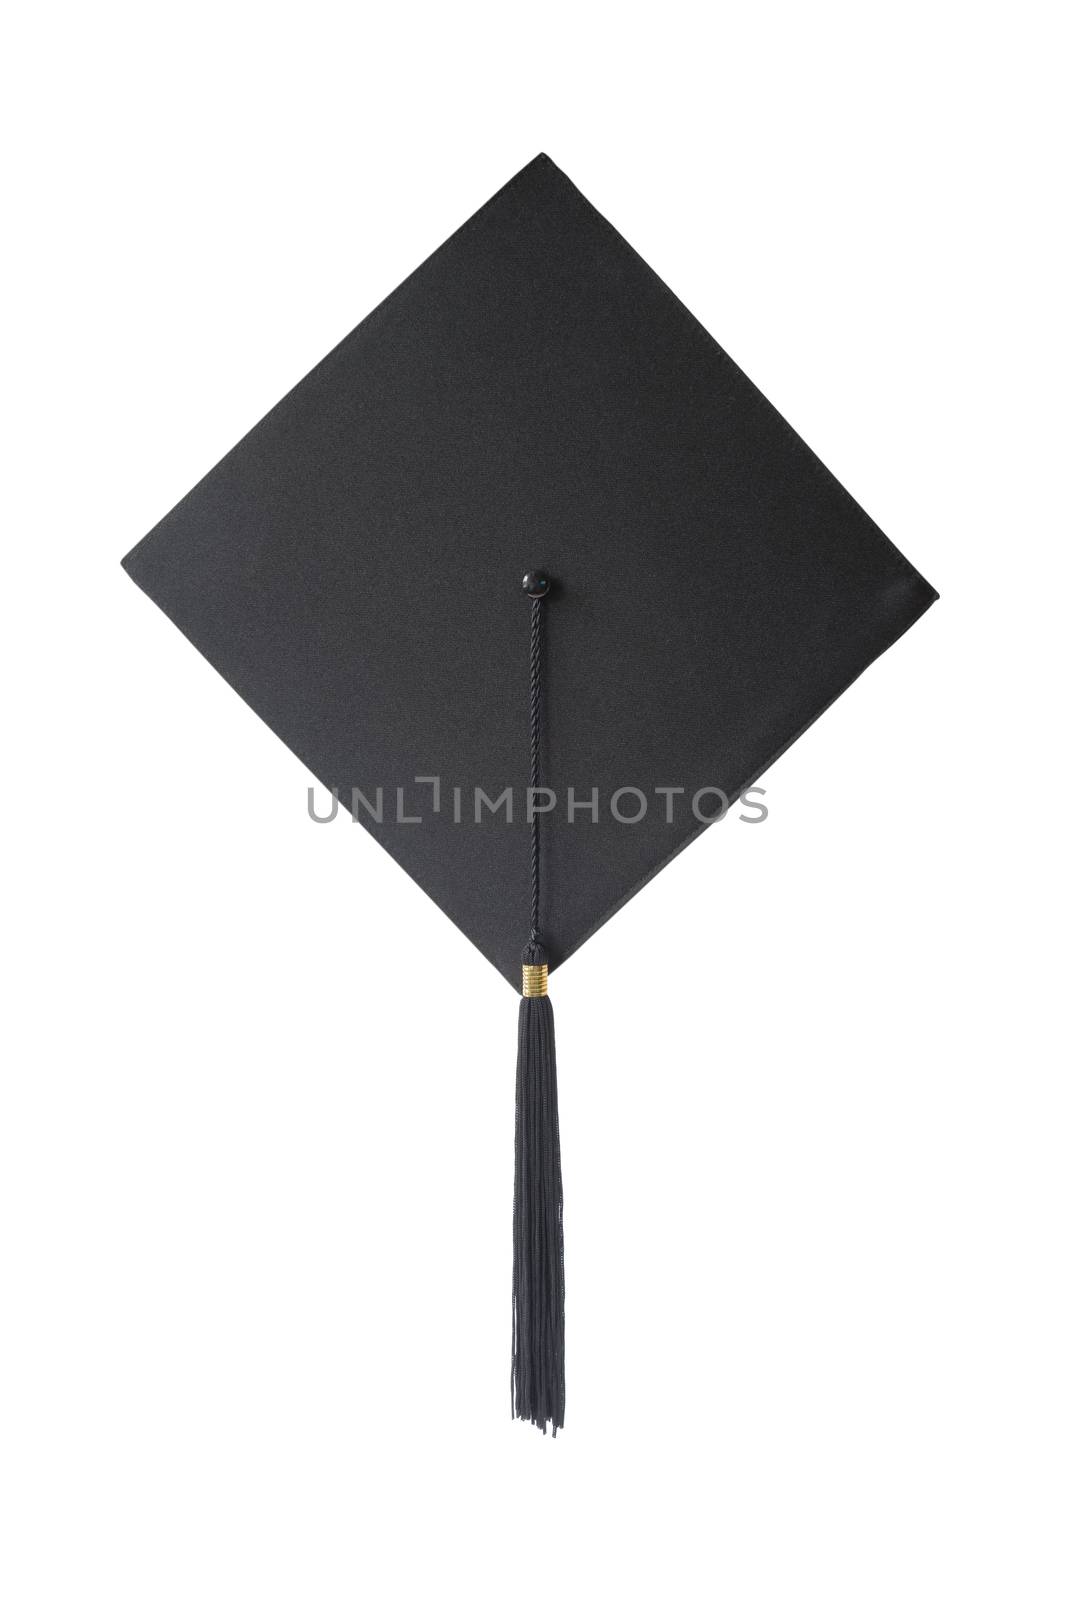 Graduation hat on white background by Epitavi